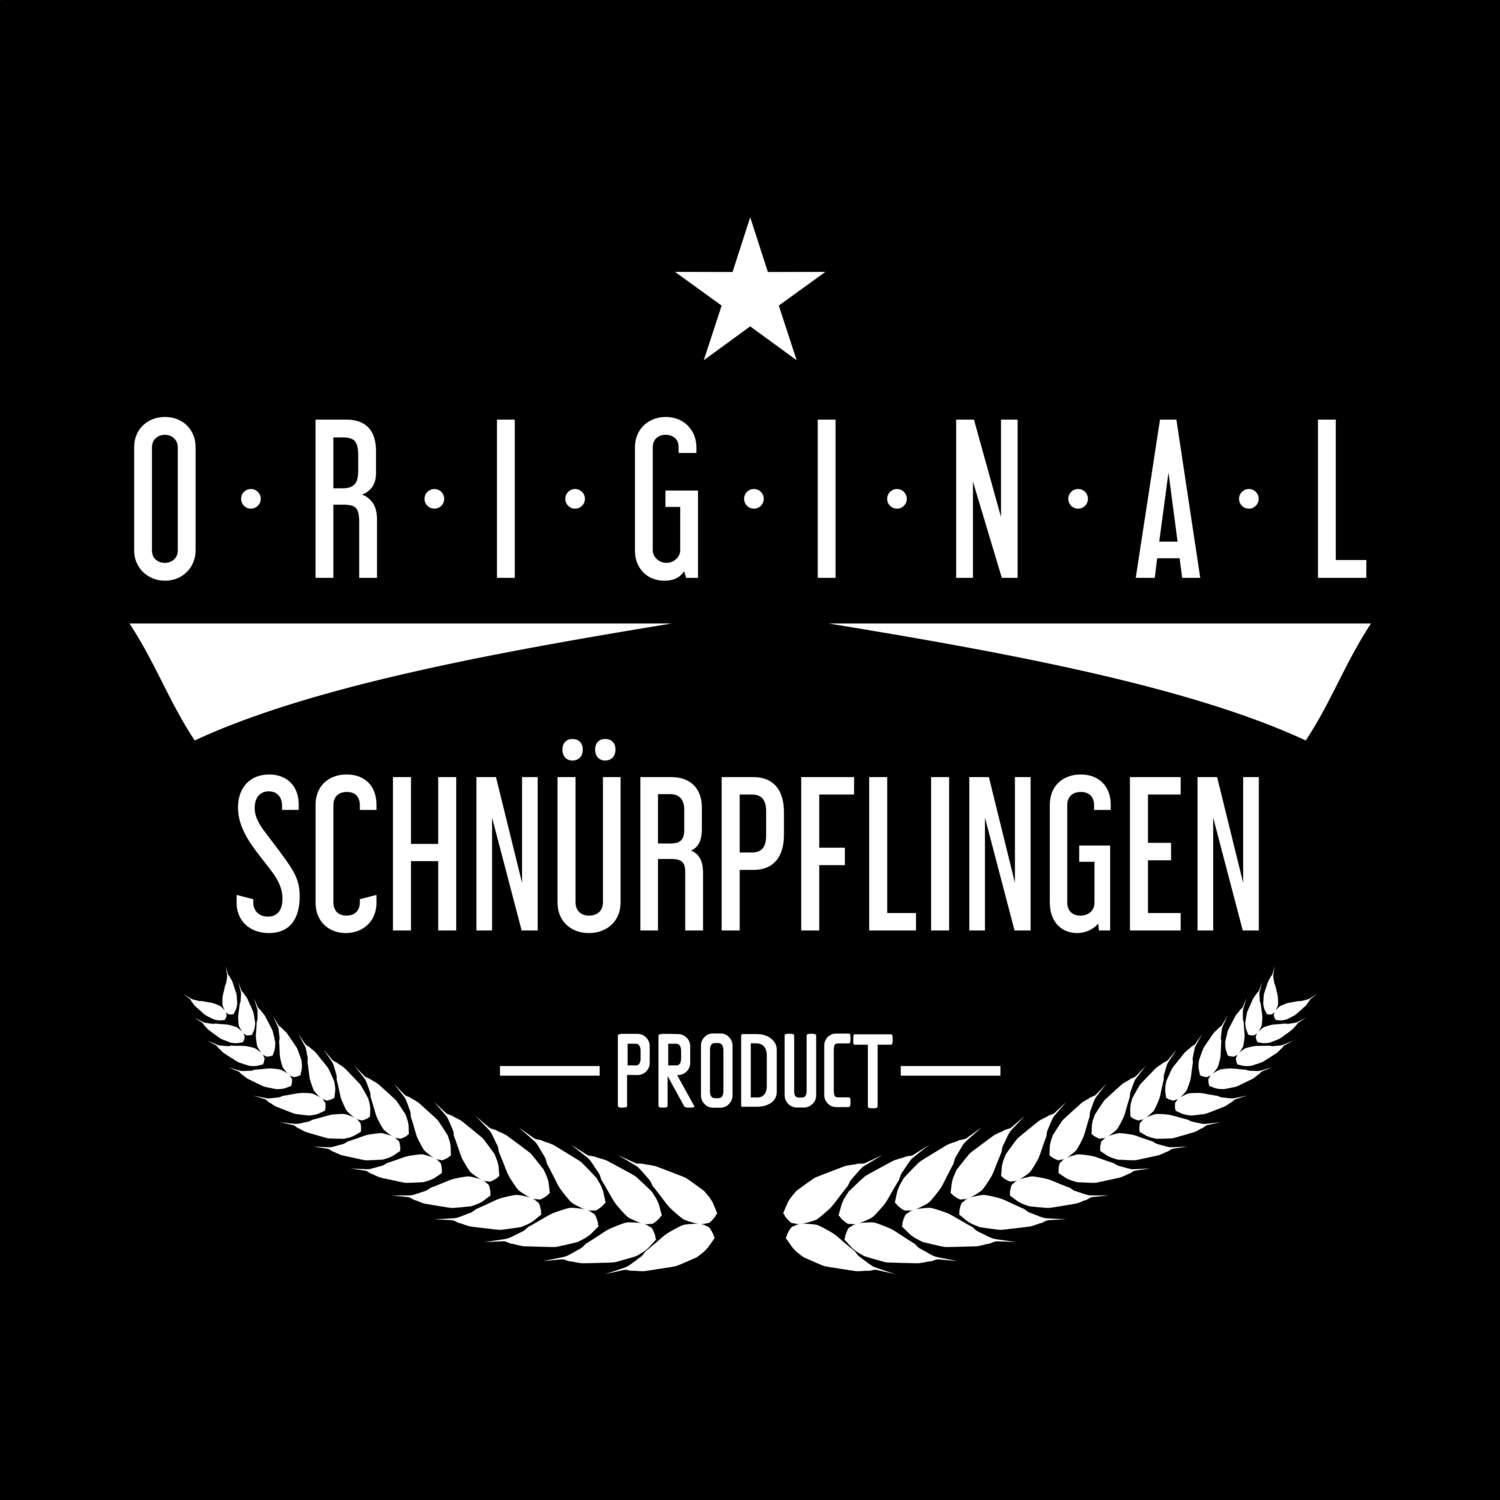 Schnürpflingen T-Shirt »Original Product«